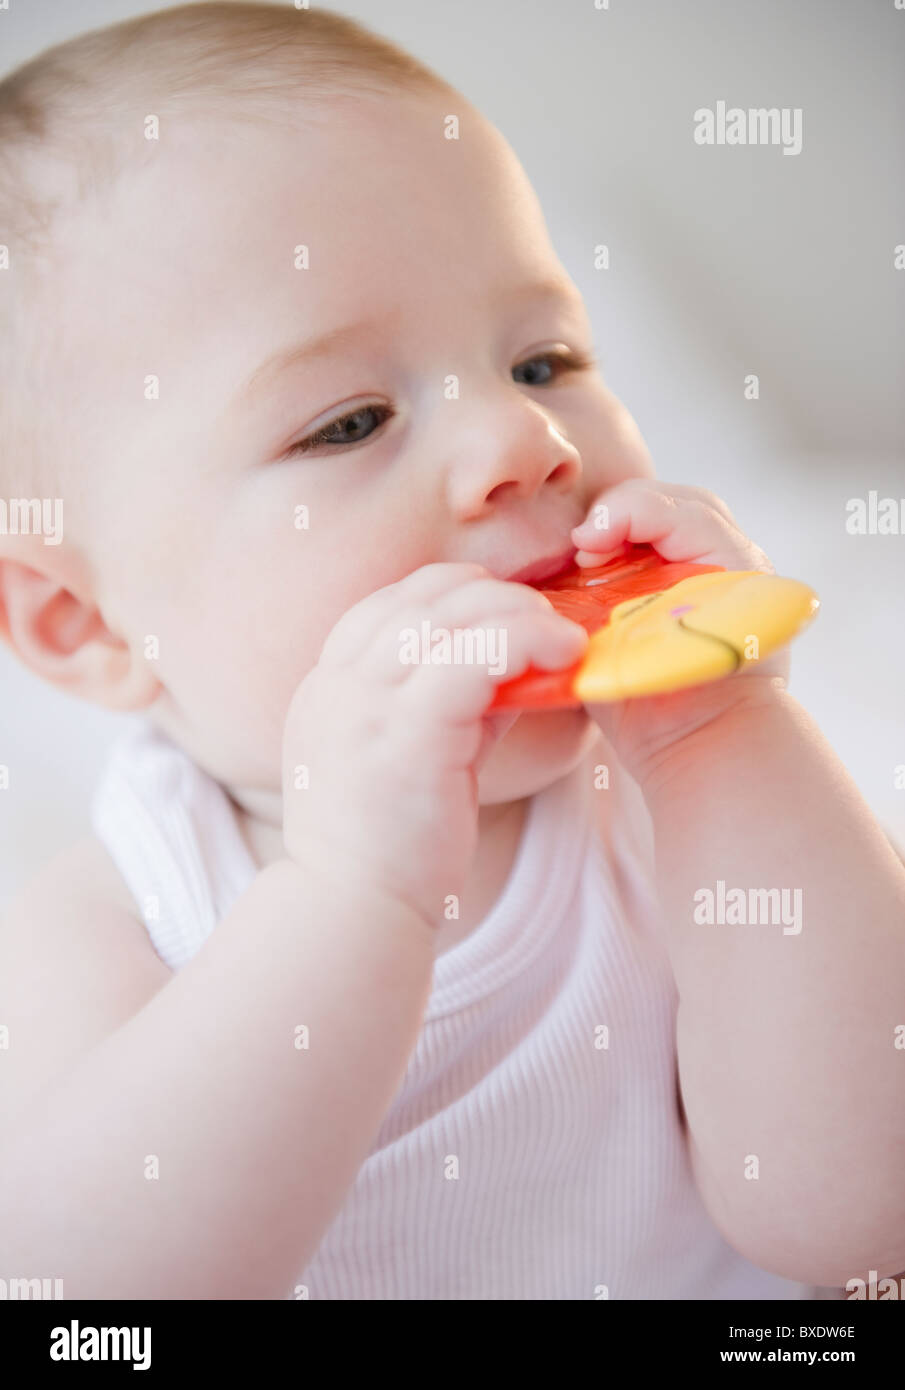 Baby sucking on teething toy Stock Photo